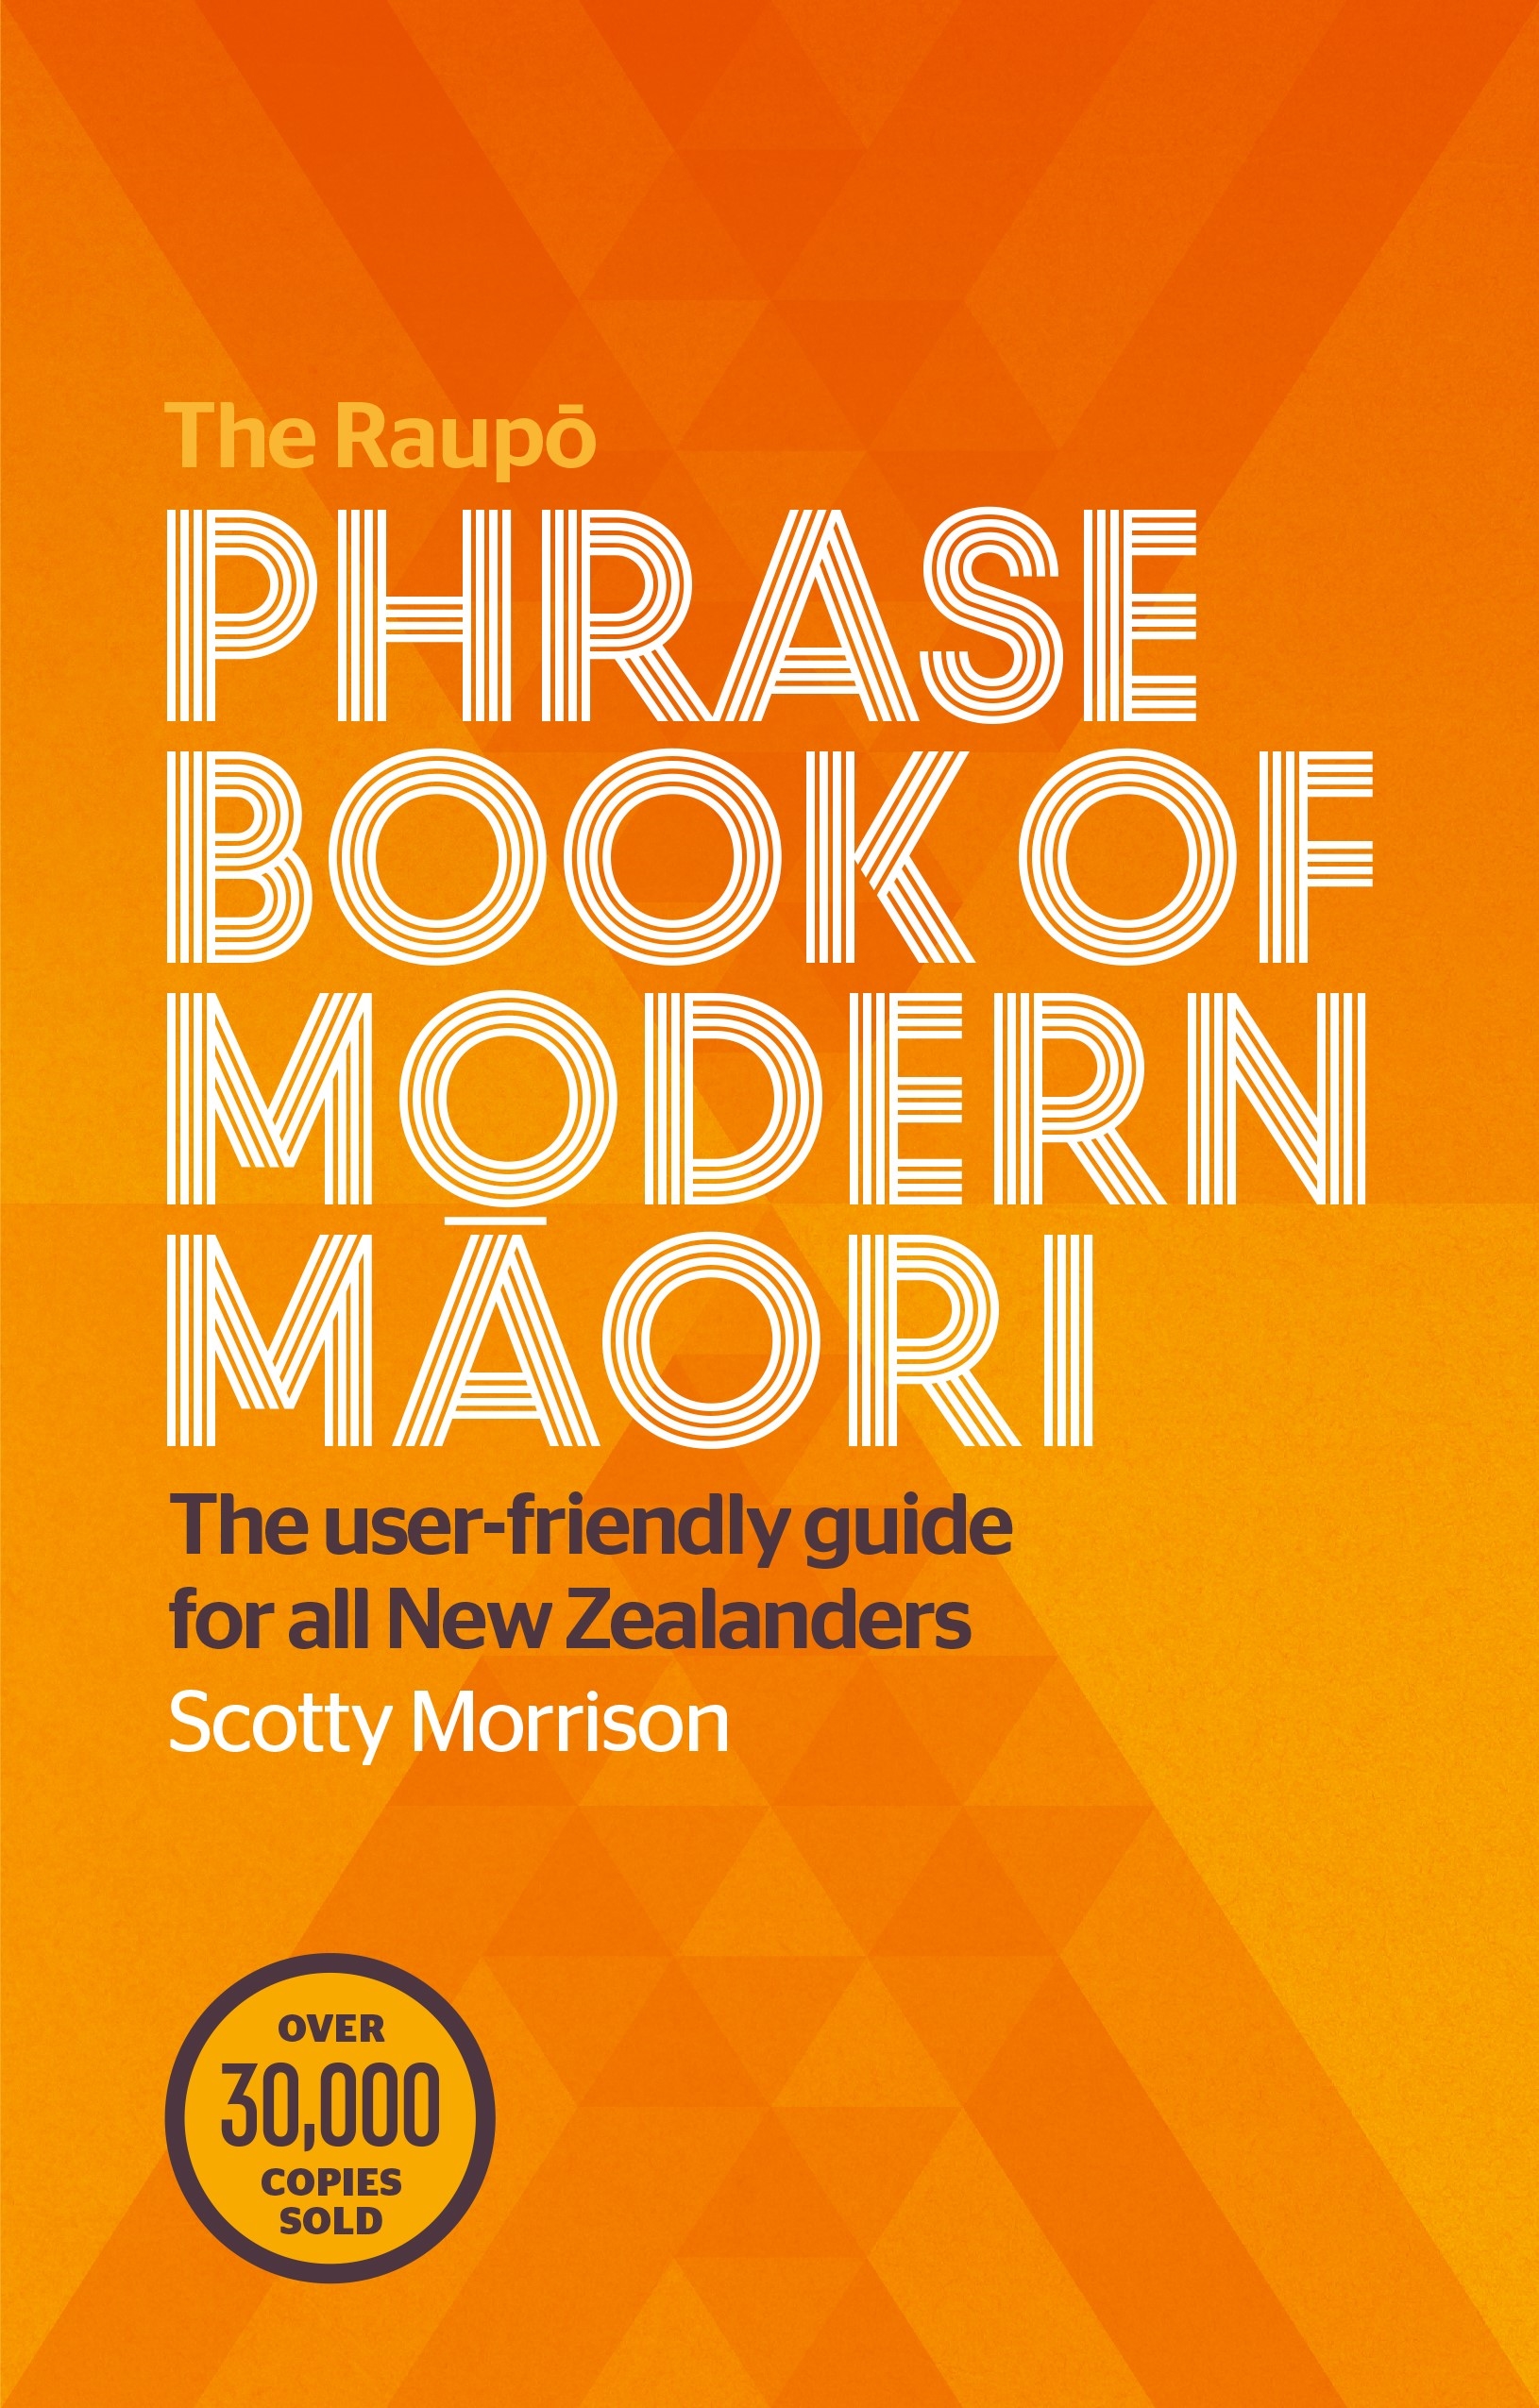 maori language guide